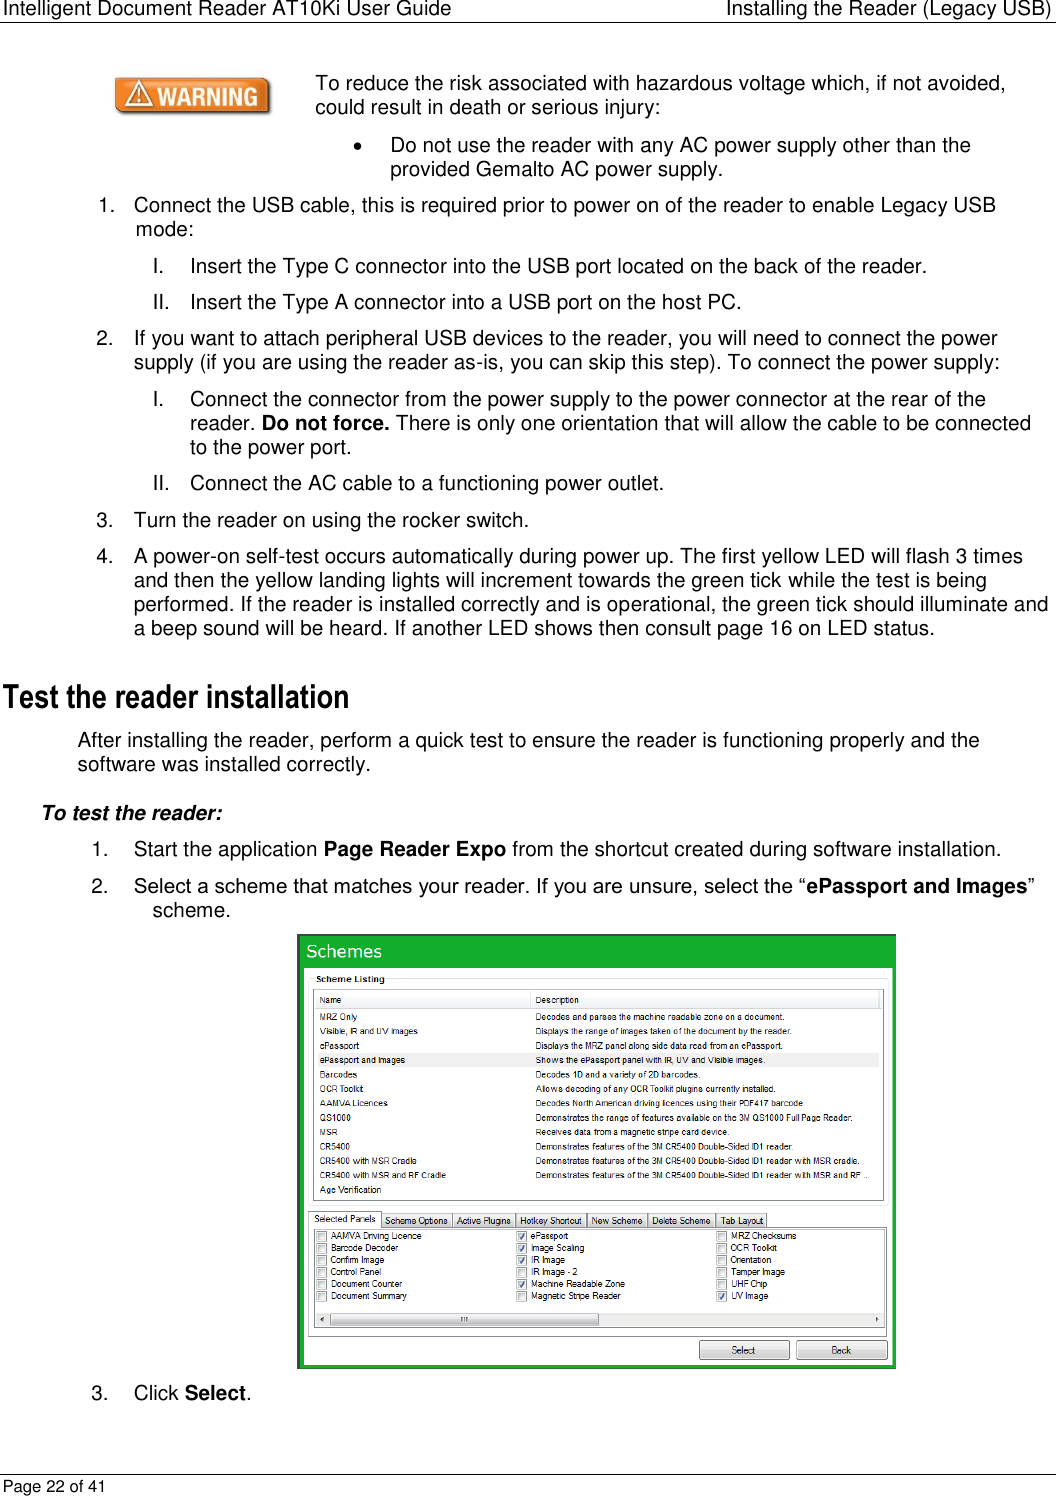 Page 22 of Thales DIS USA PR01523 ation Scanner User Manual